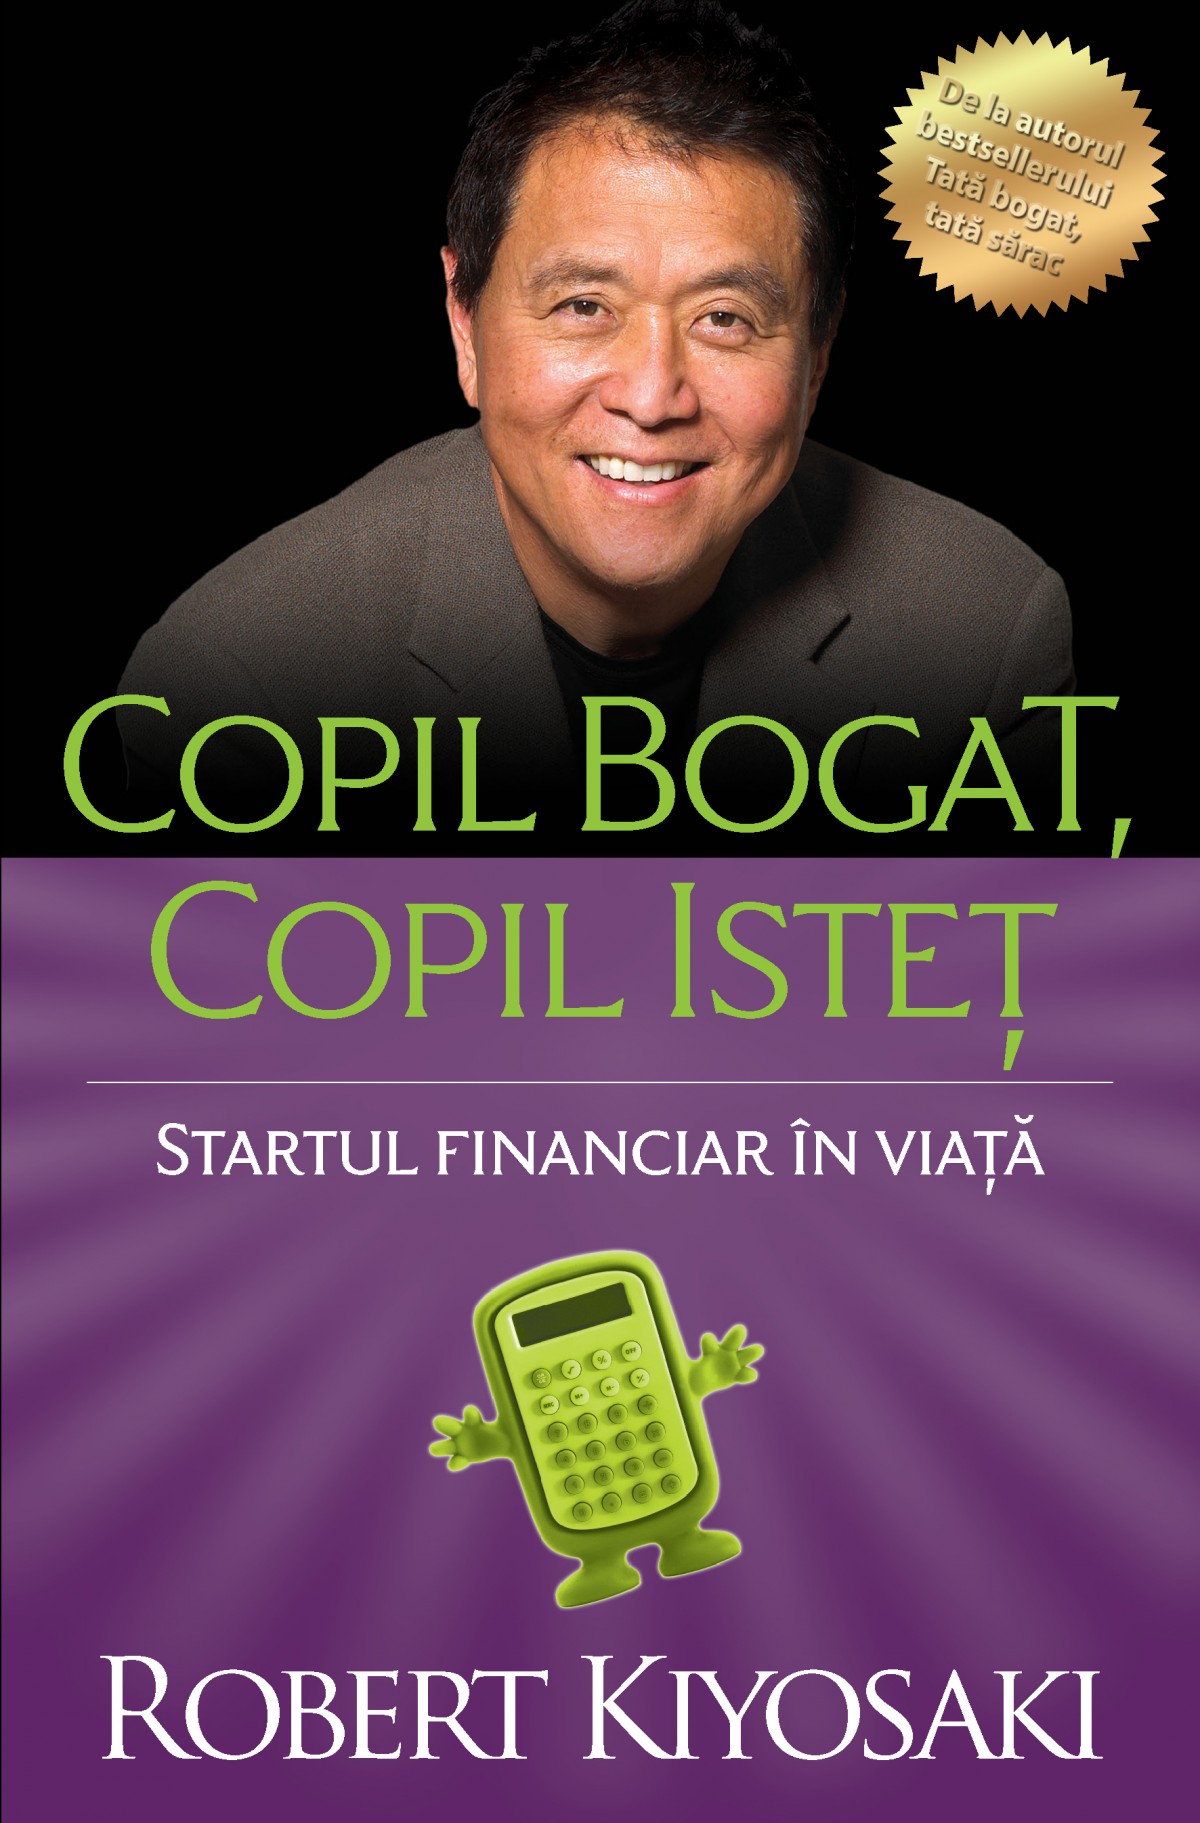 Copil bogat, copil istet | Robert T. Kiyosaki carturesti.ro poza bestsellers.ro